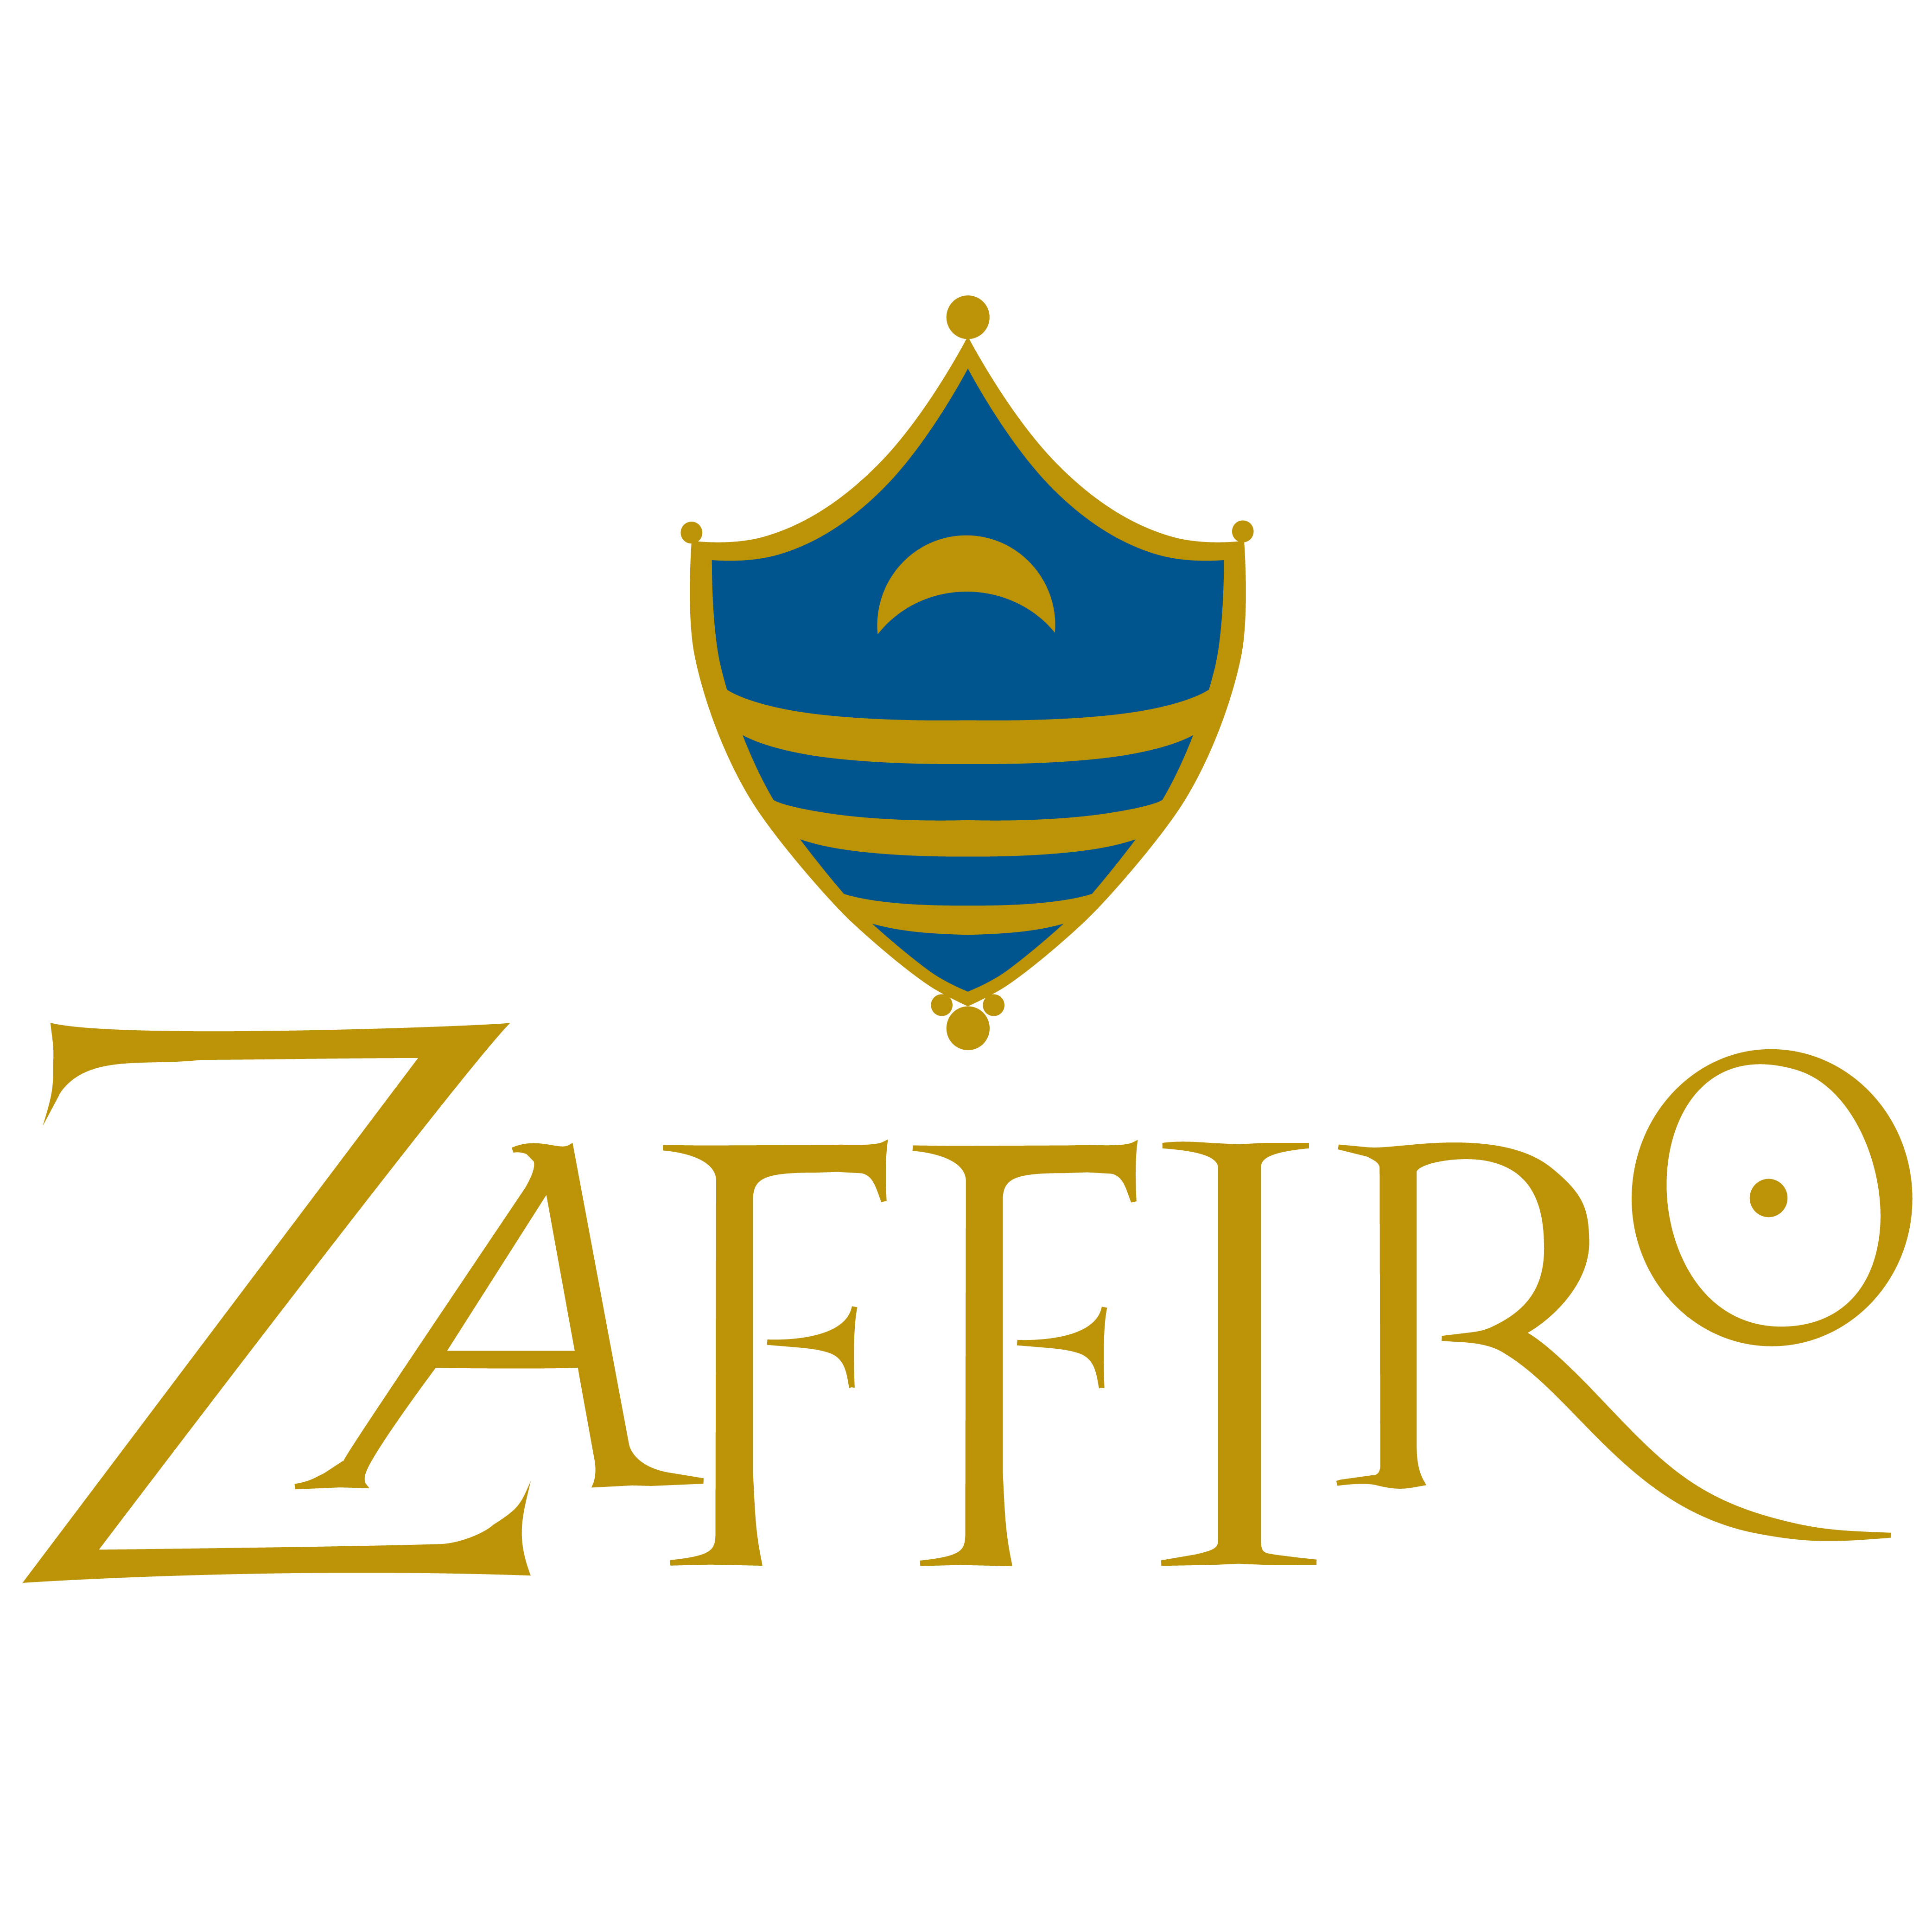 Zaffiro logo